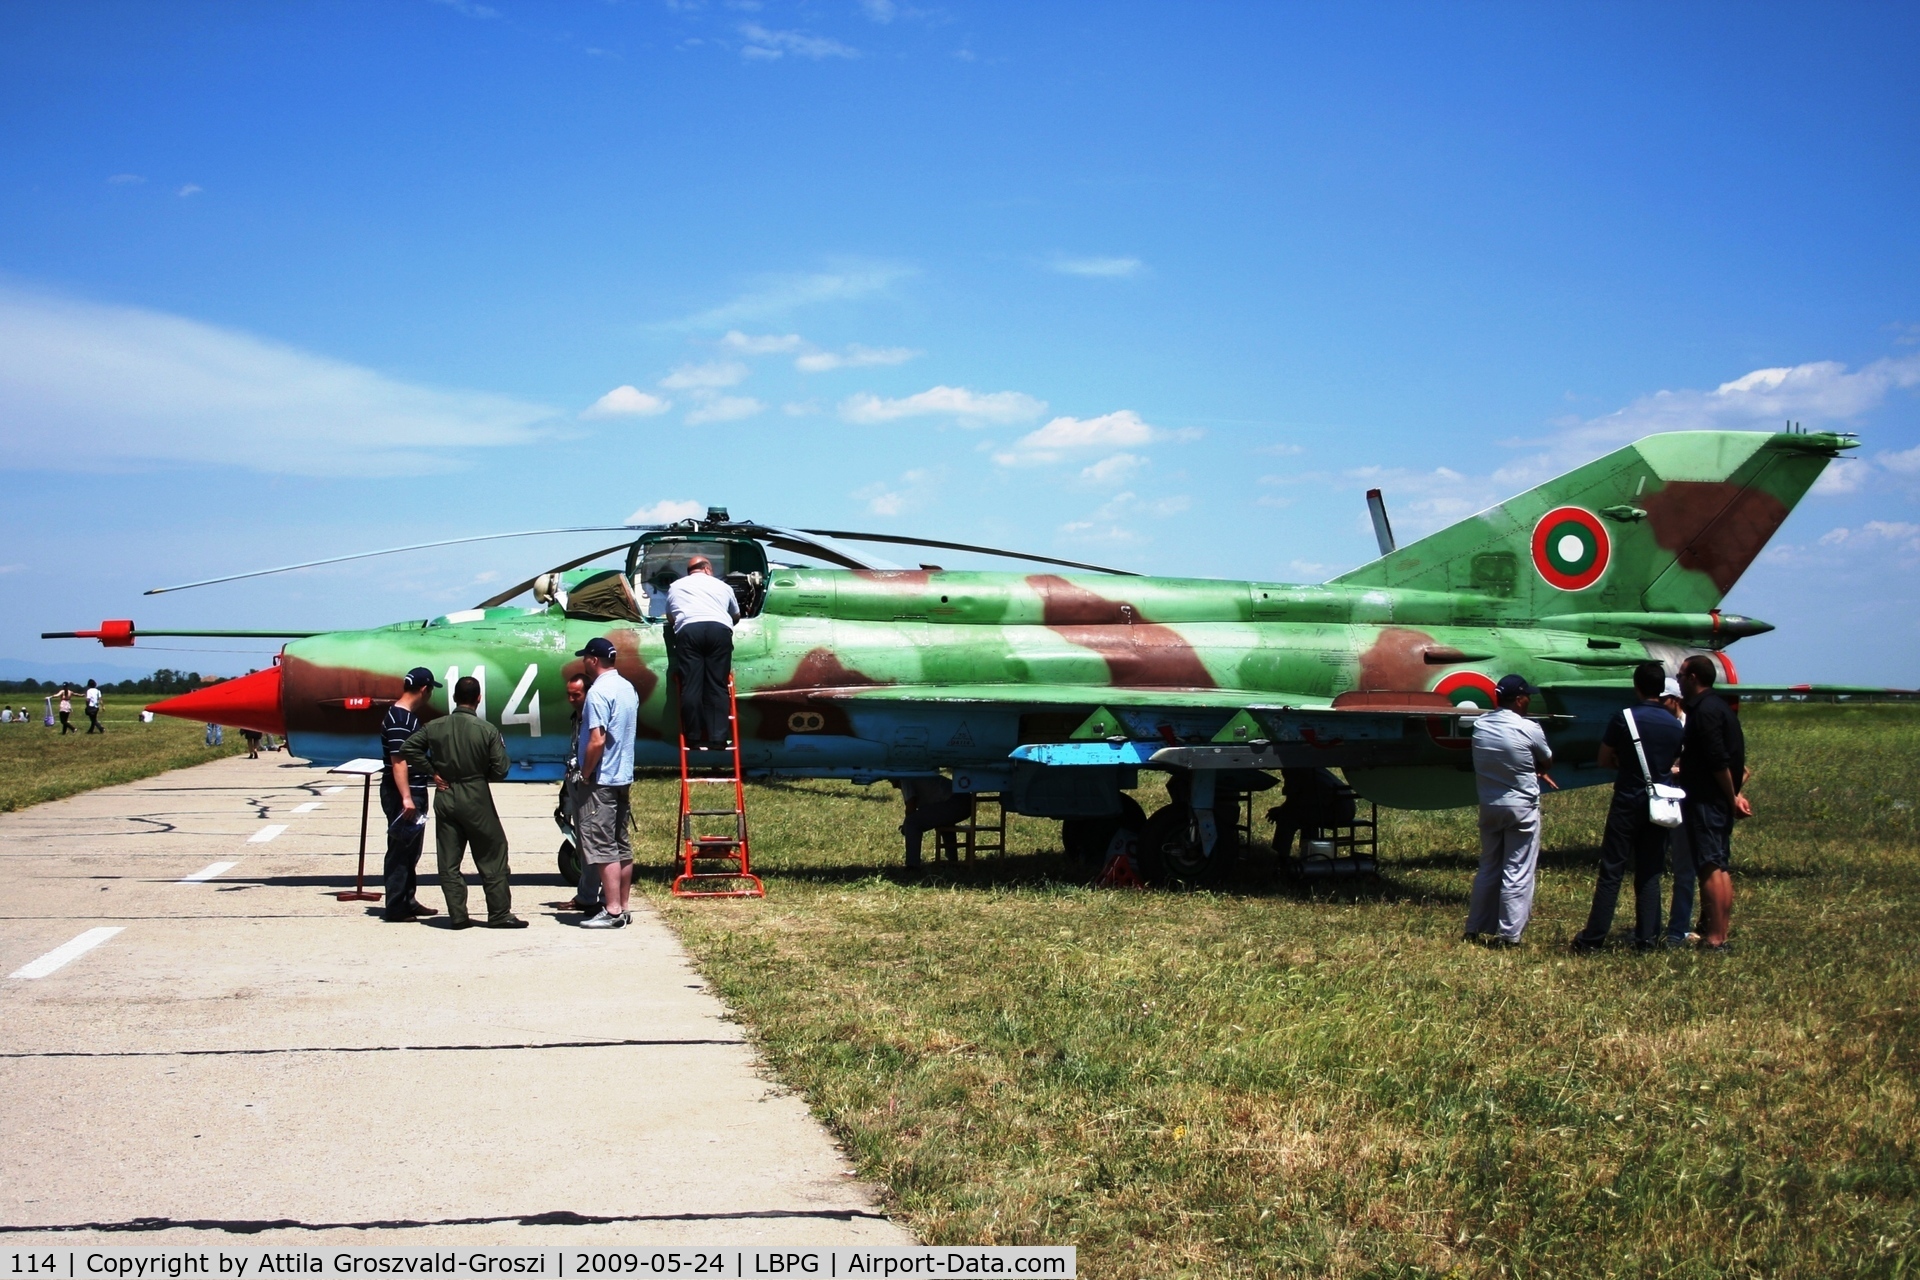 114, 1985 Mikoyan-Gurevich MiG-21bis SAU C/N 75094114, BIAF 09 Bulgaria Plovdiv (Krumovo) LBPG Graf Ignatievo Military Air Base -  (SAU referring to Sistema Avtomaticheskovo Upravleniya = 